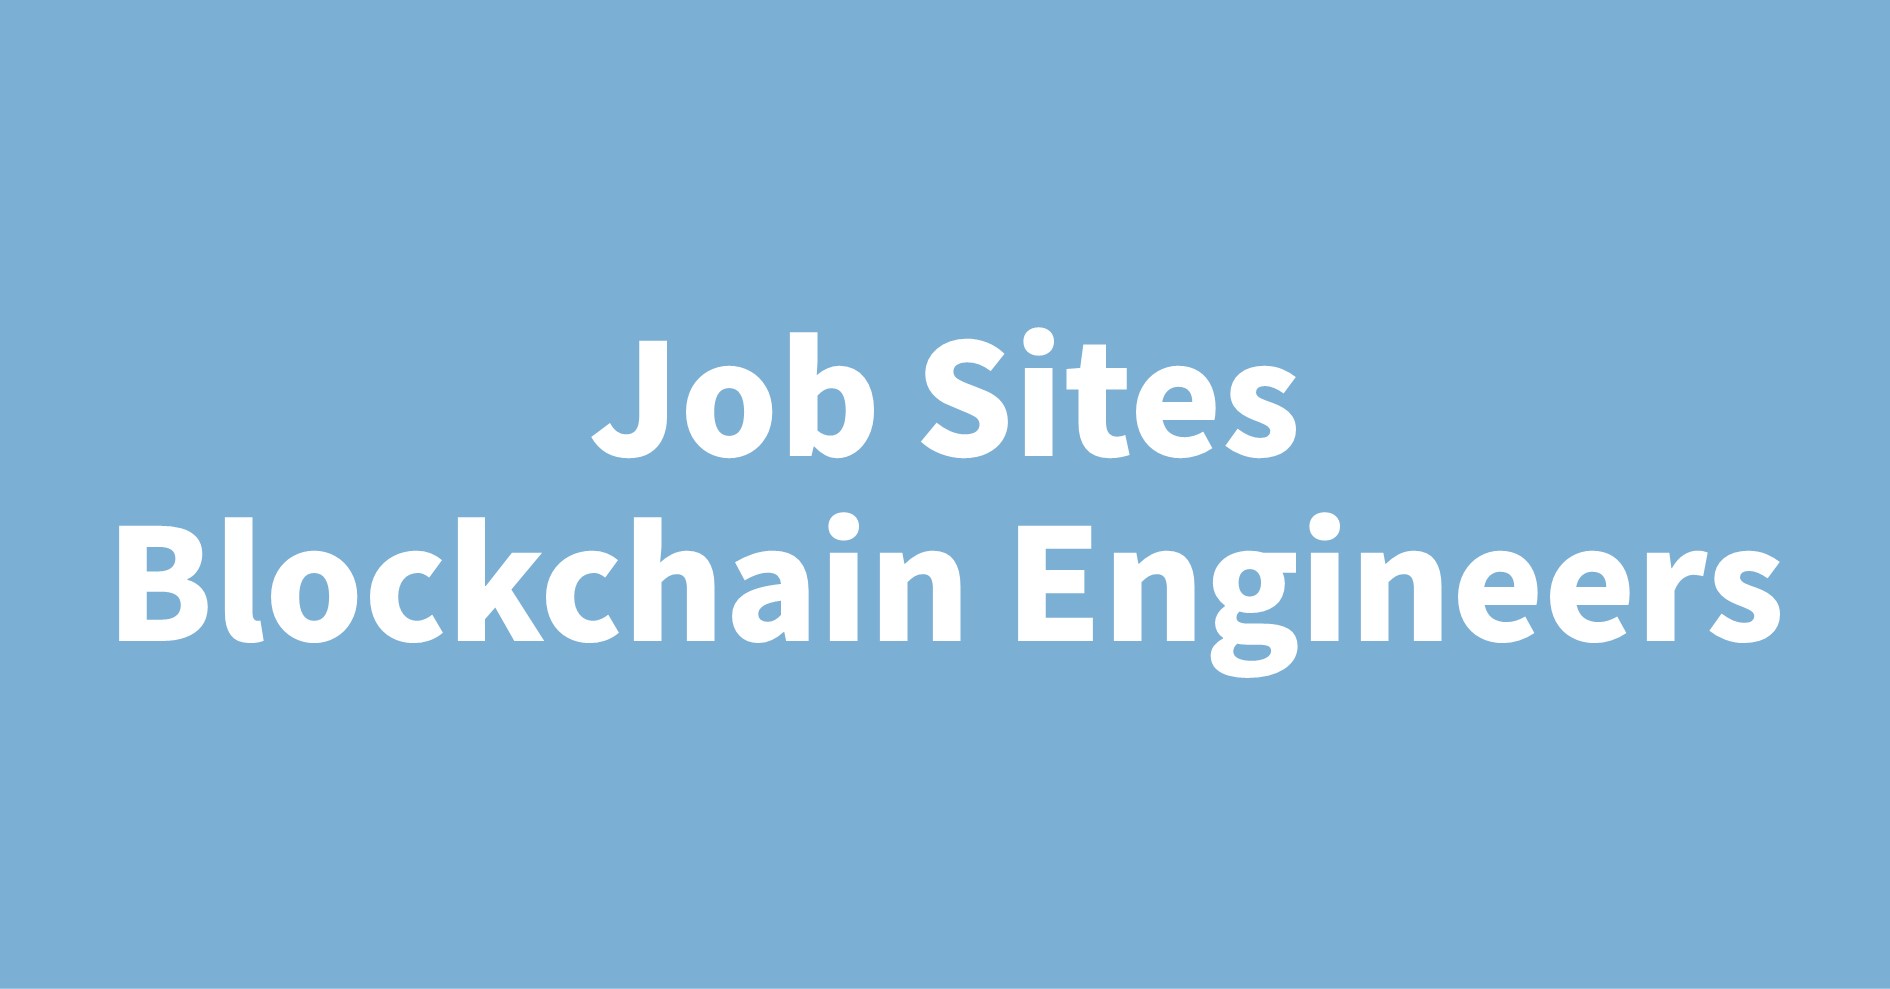 Job Sites Blockchain Engineers